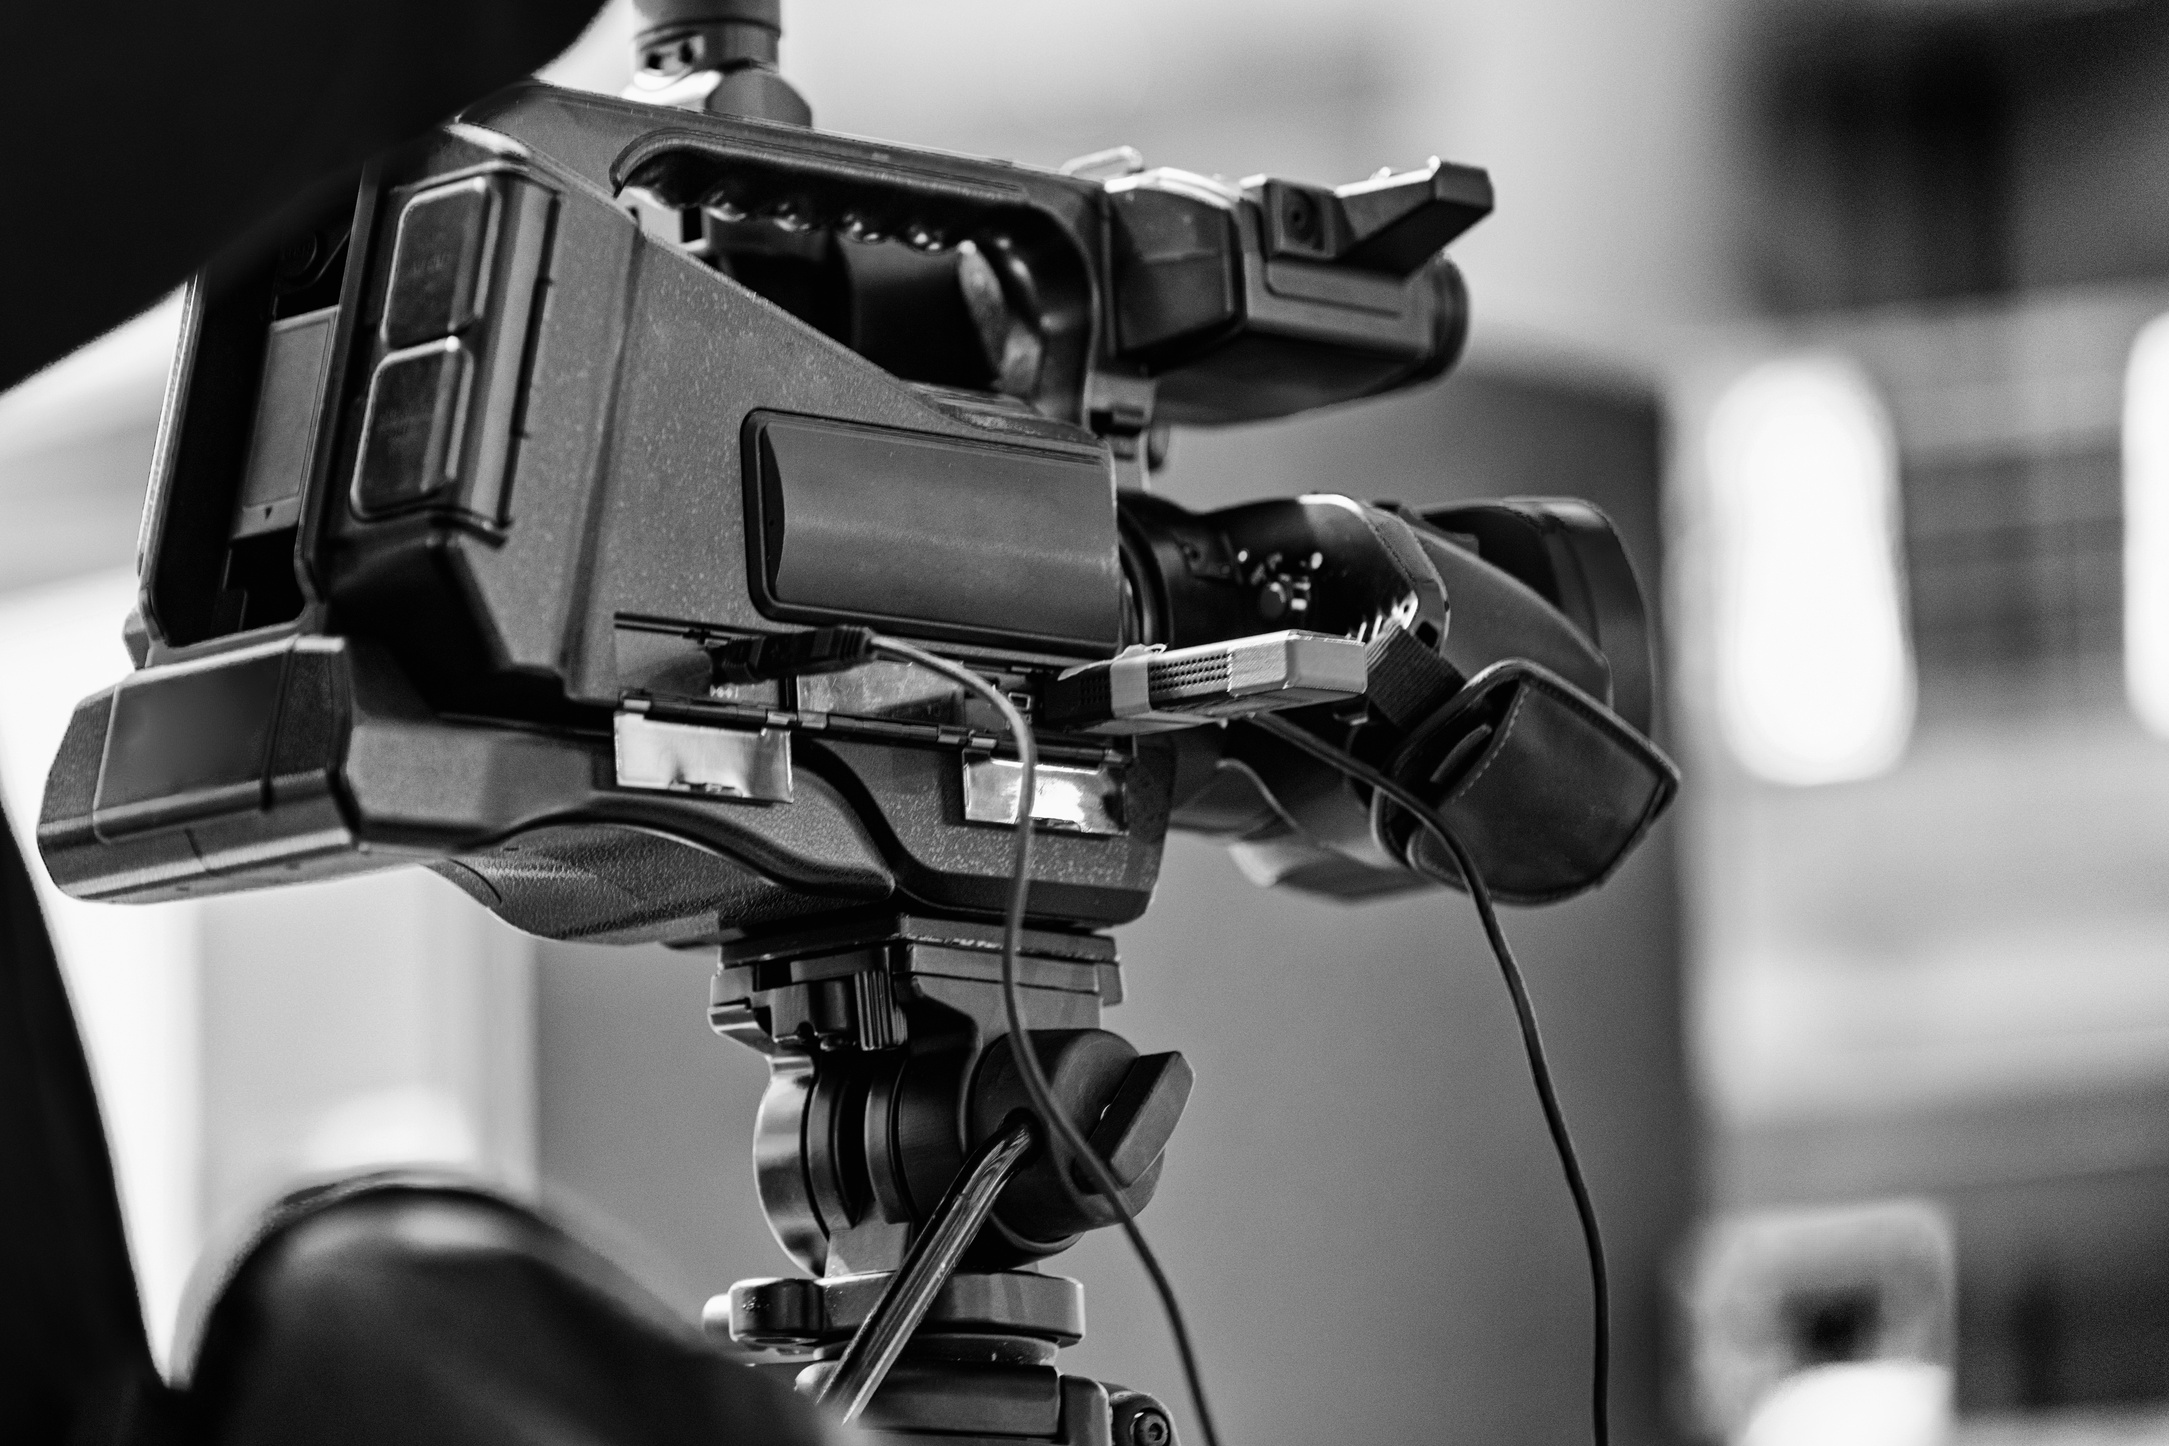 Cameraman Recording Event At Media Press Conference